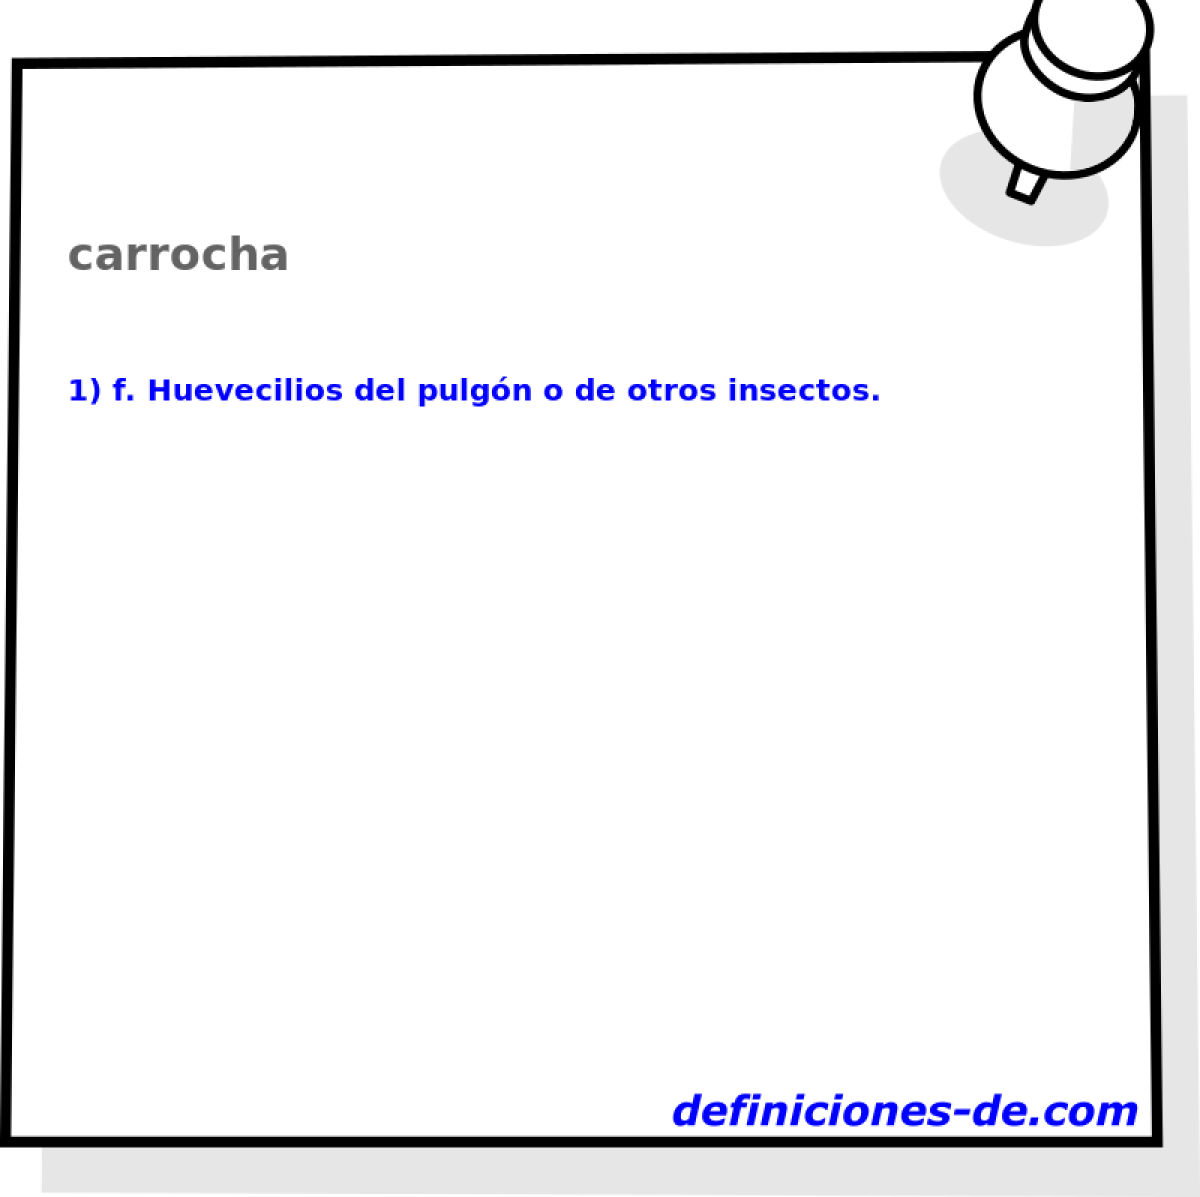 carrocha 